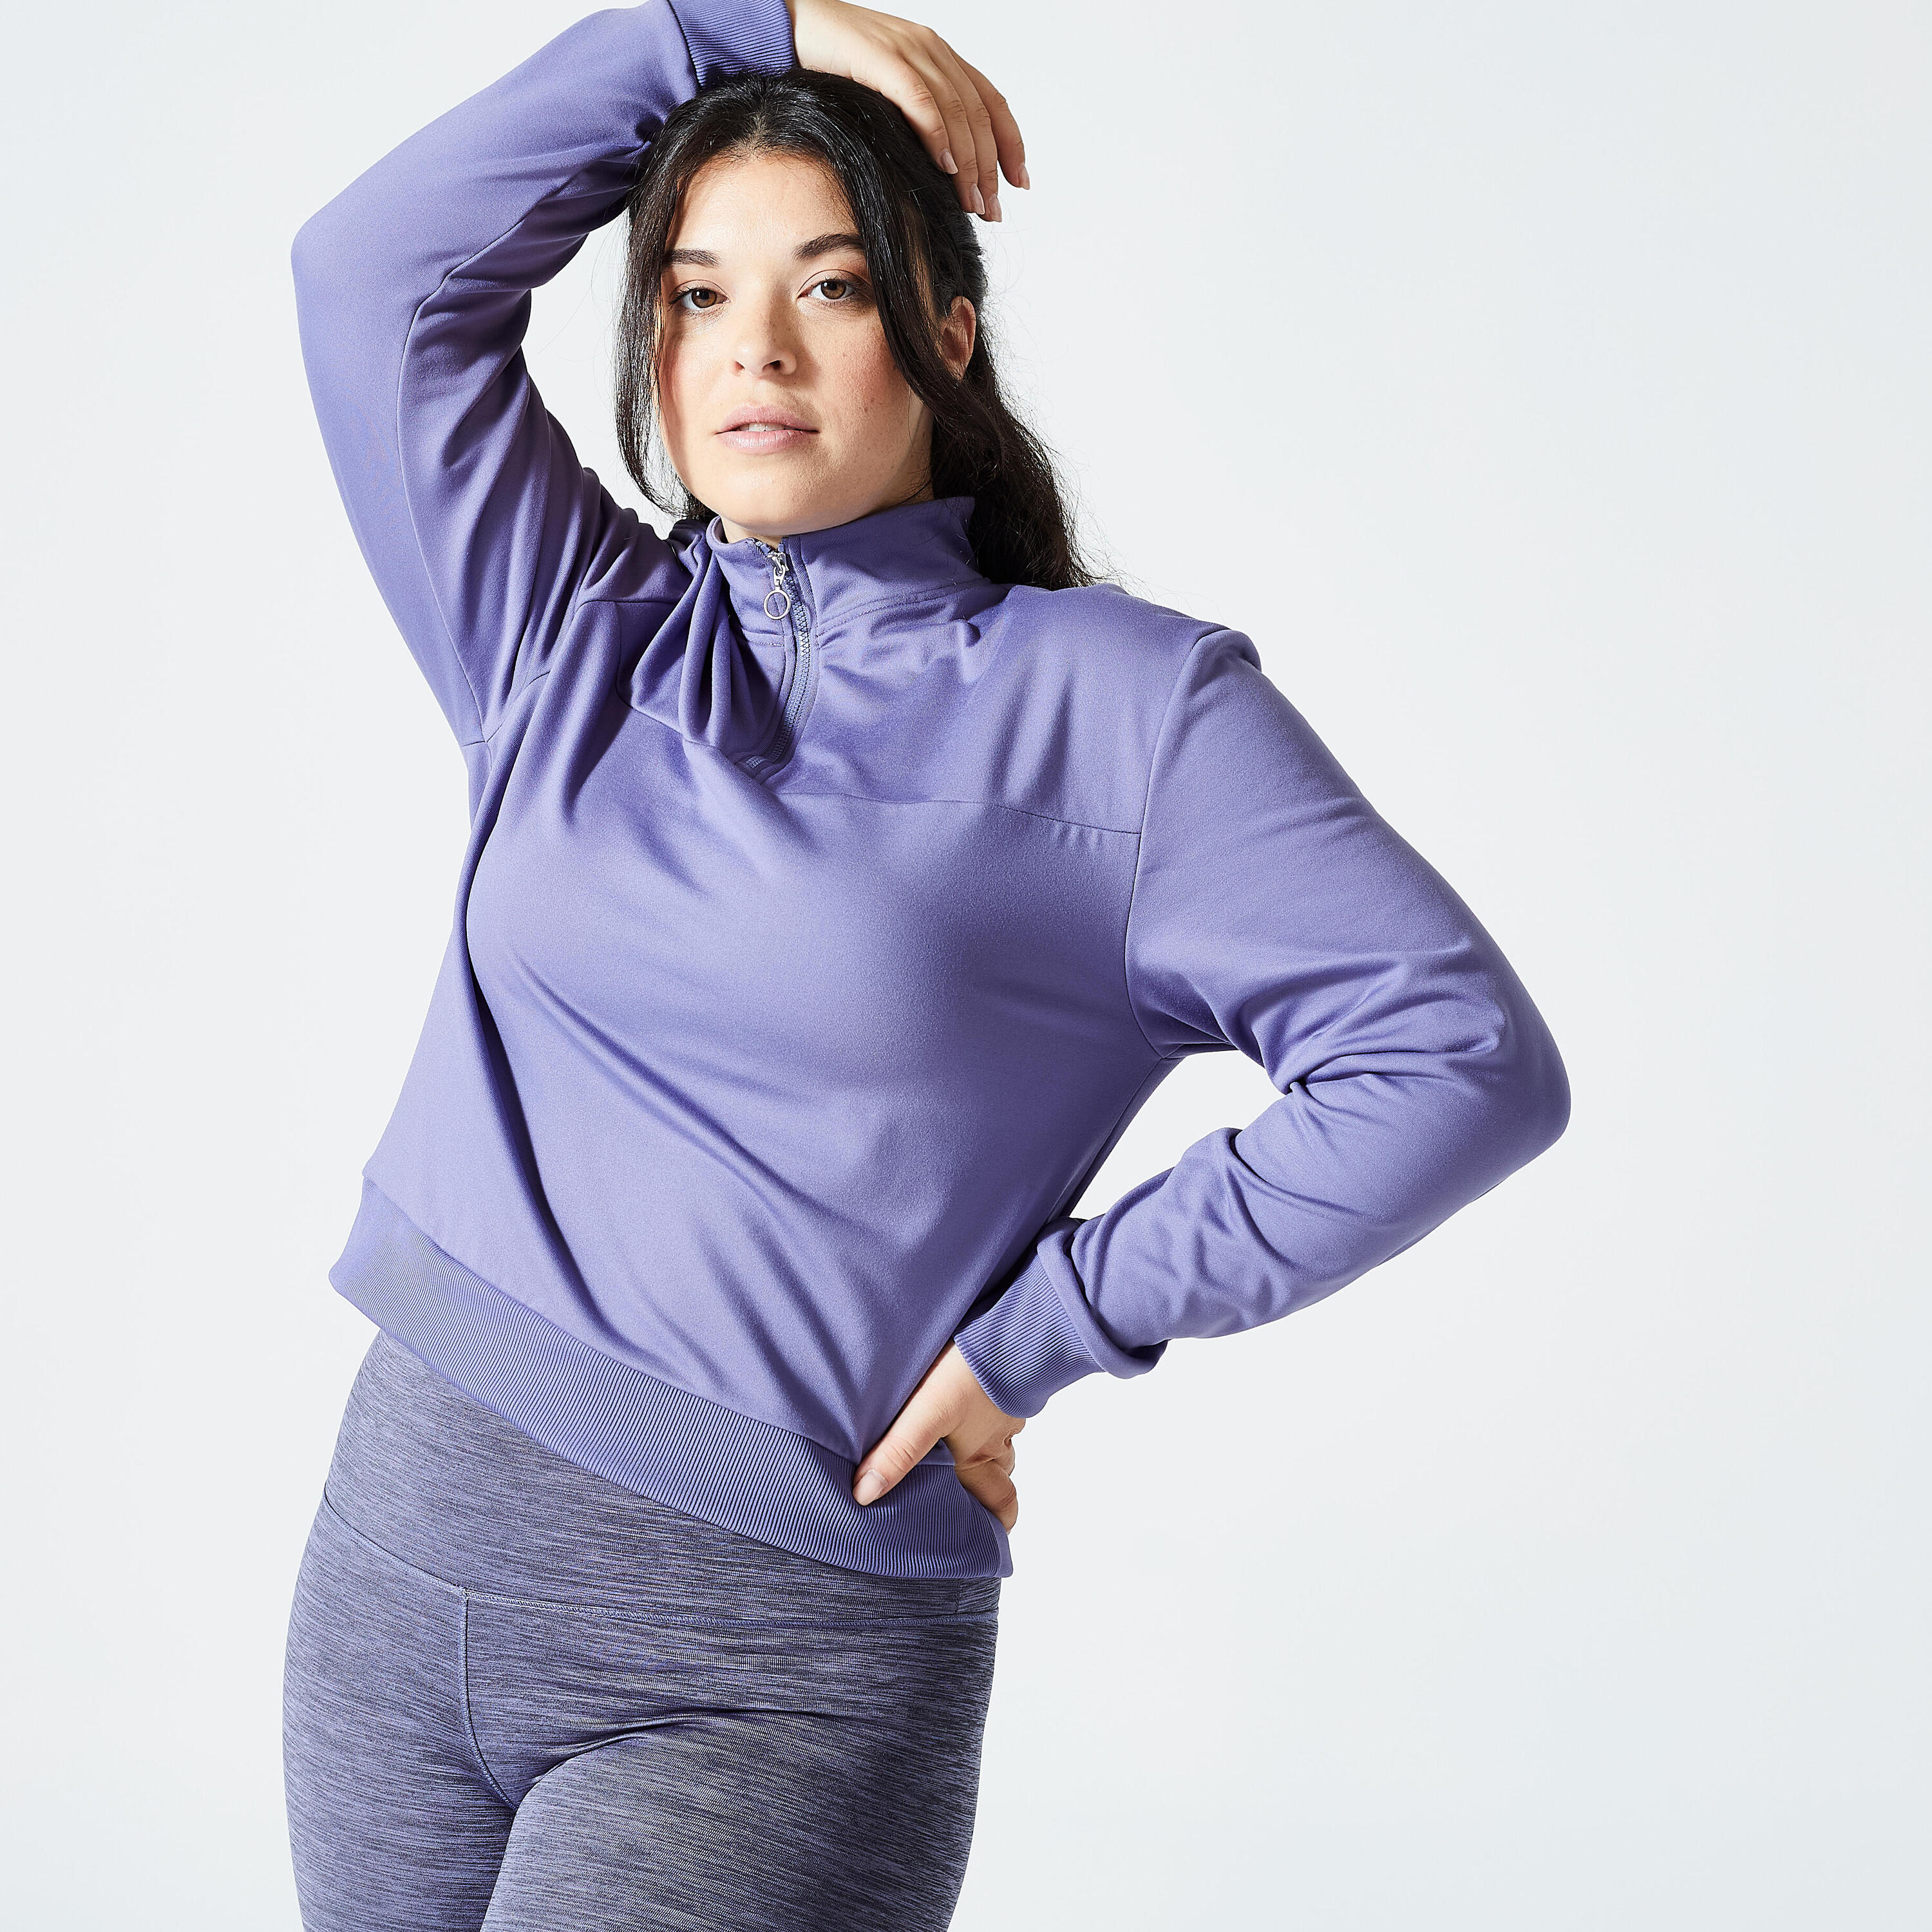 DOMYOS Women's Cropped Long-Sleeved Fitness Cardio Sweatshirt - Purple